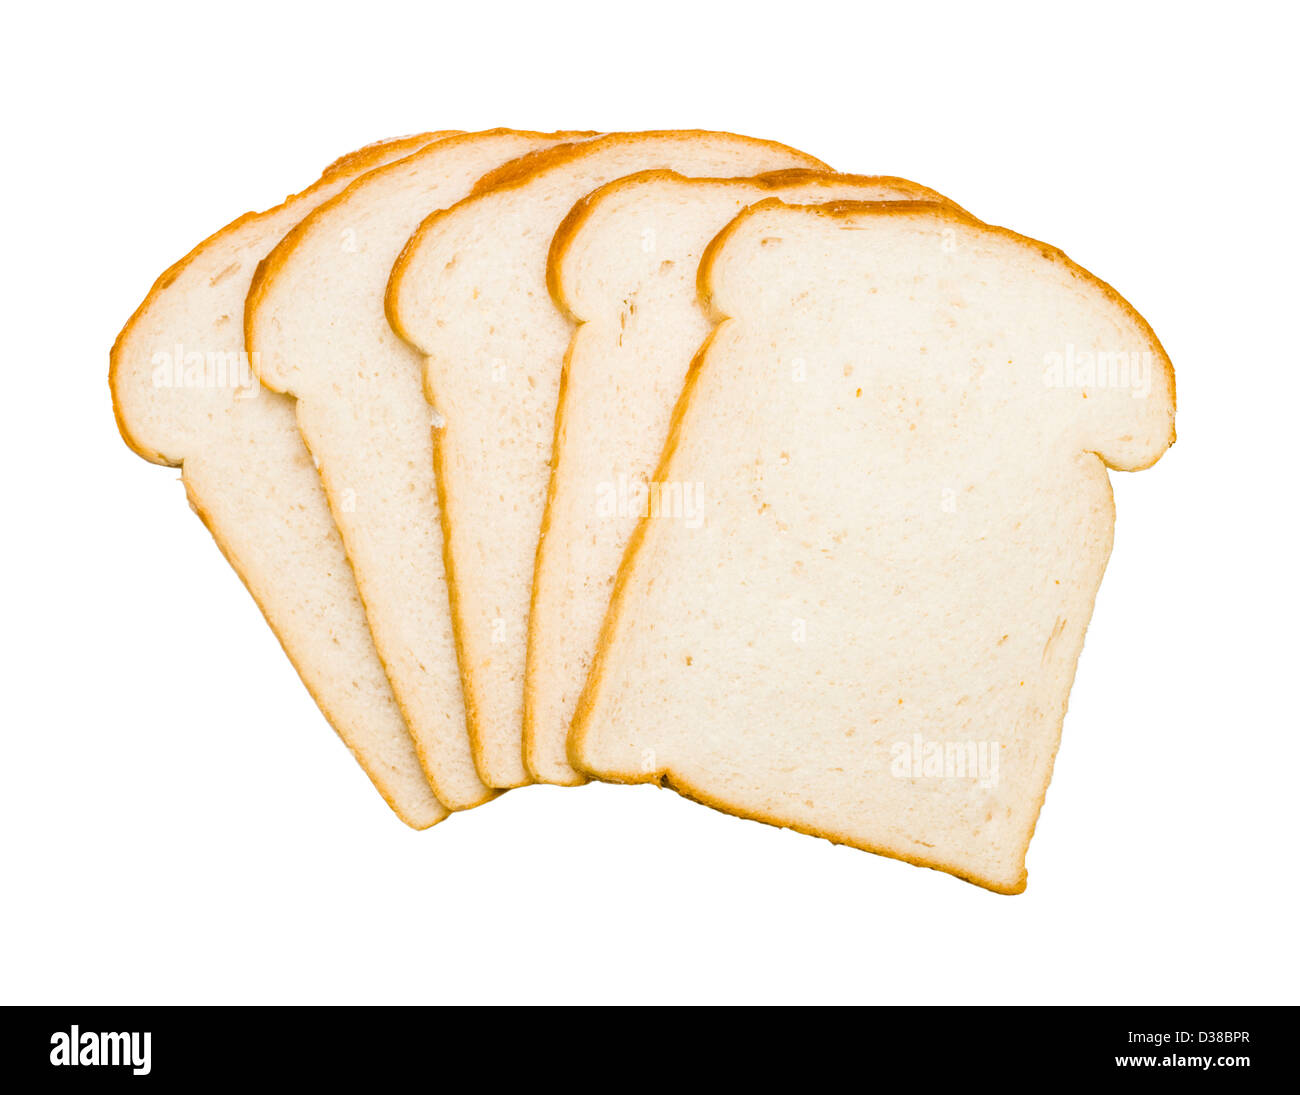 Slices of white bread. Stock Photo